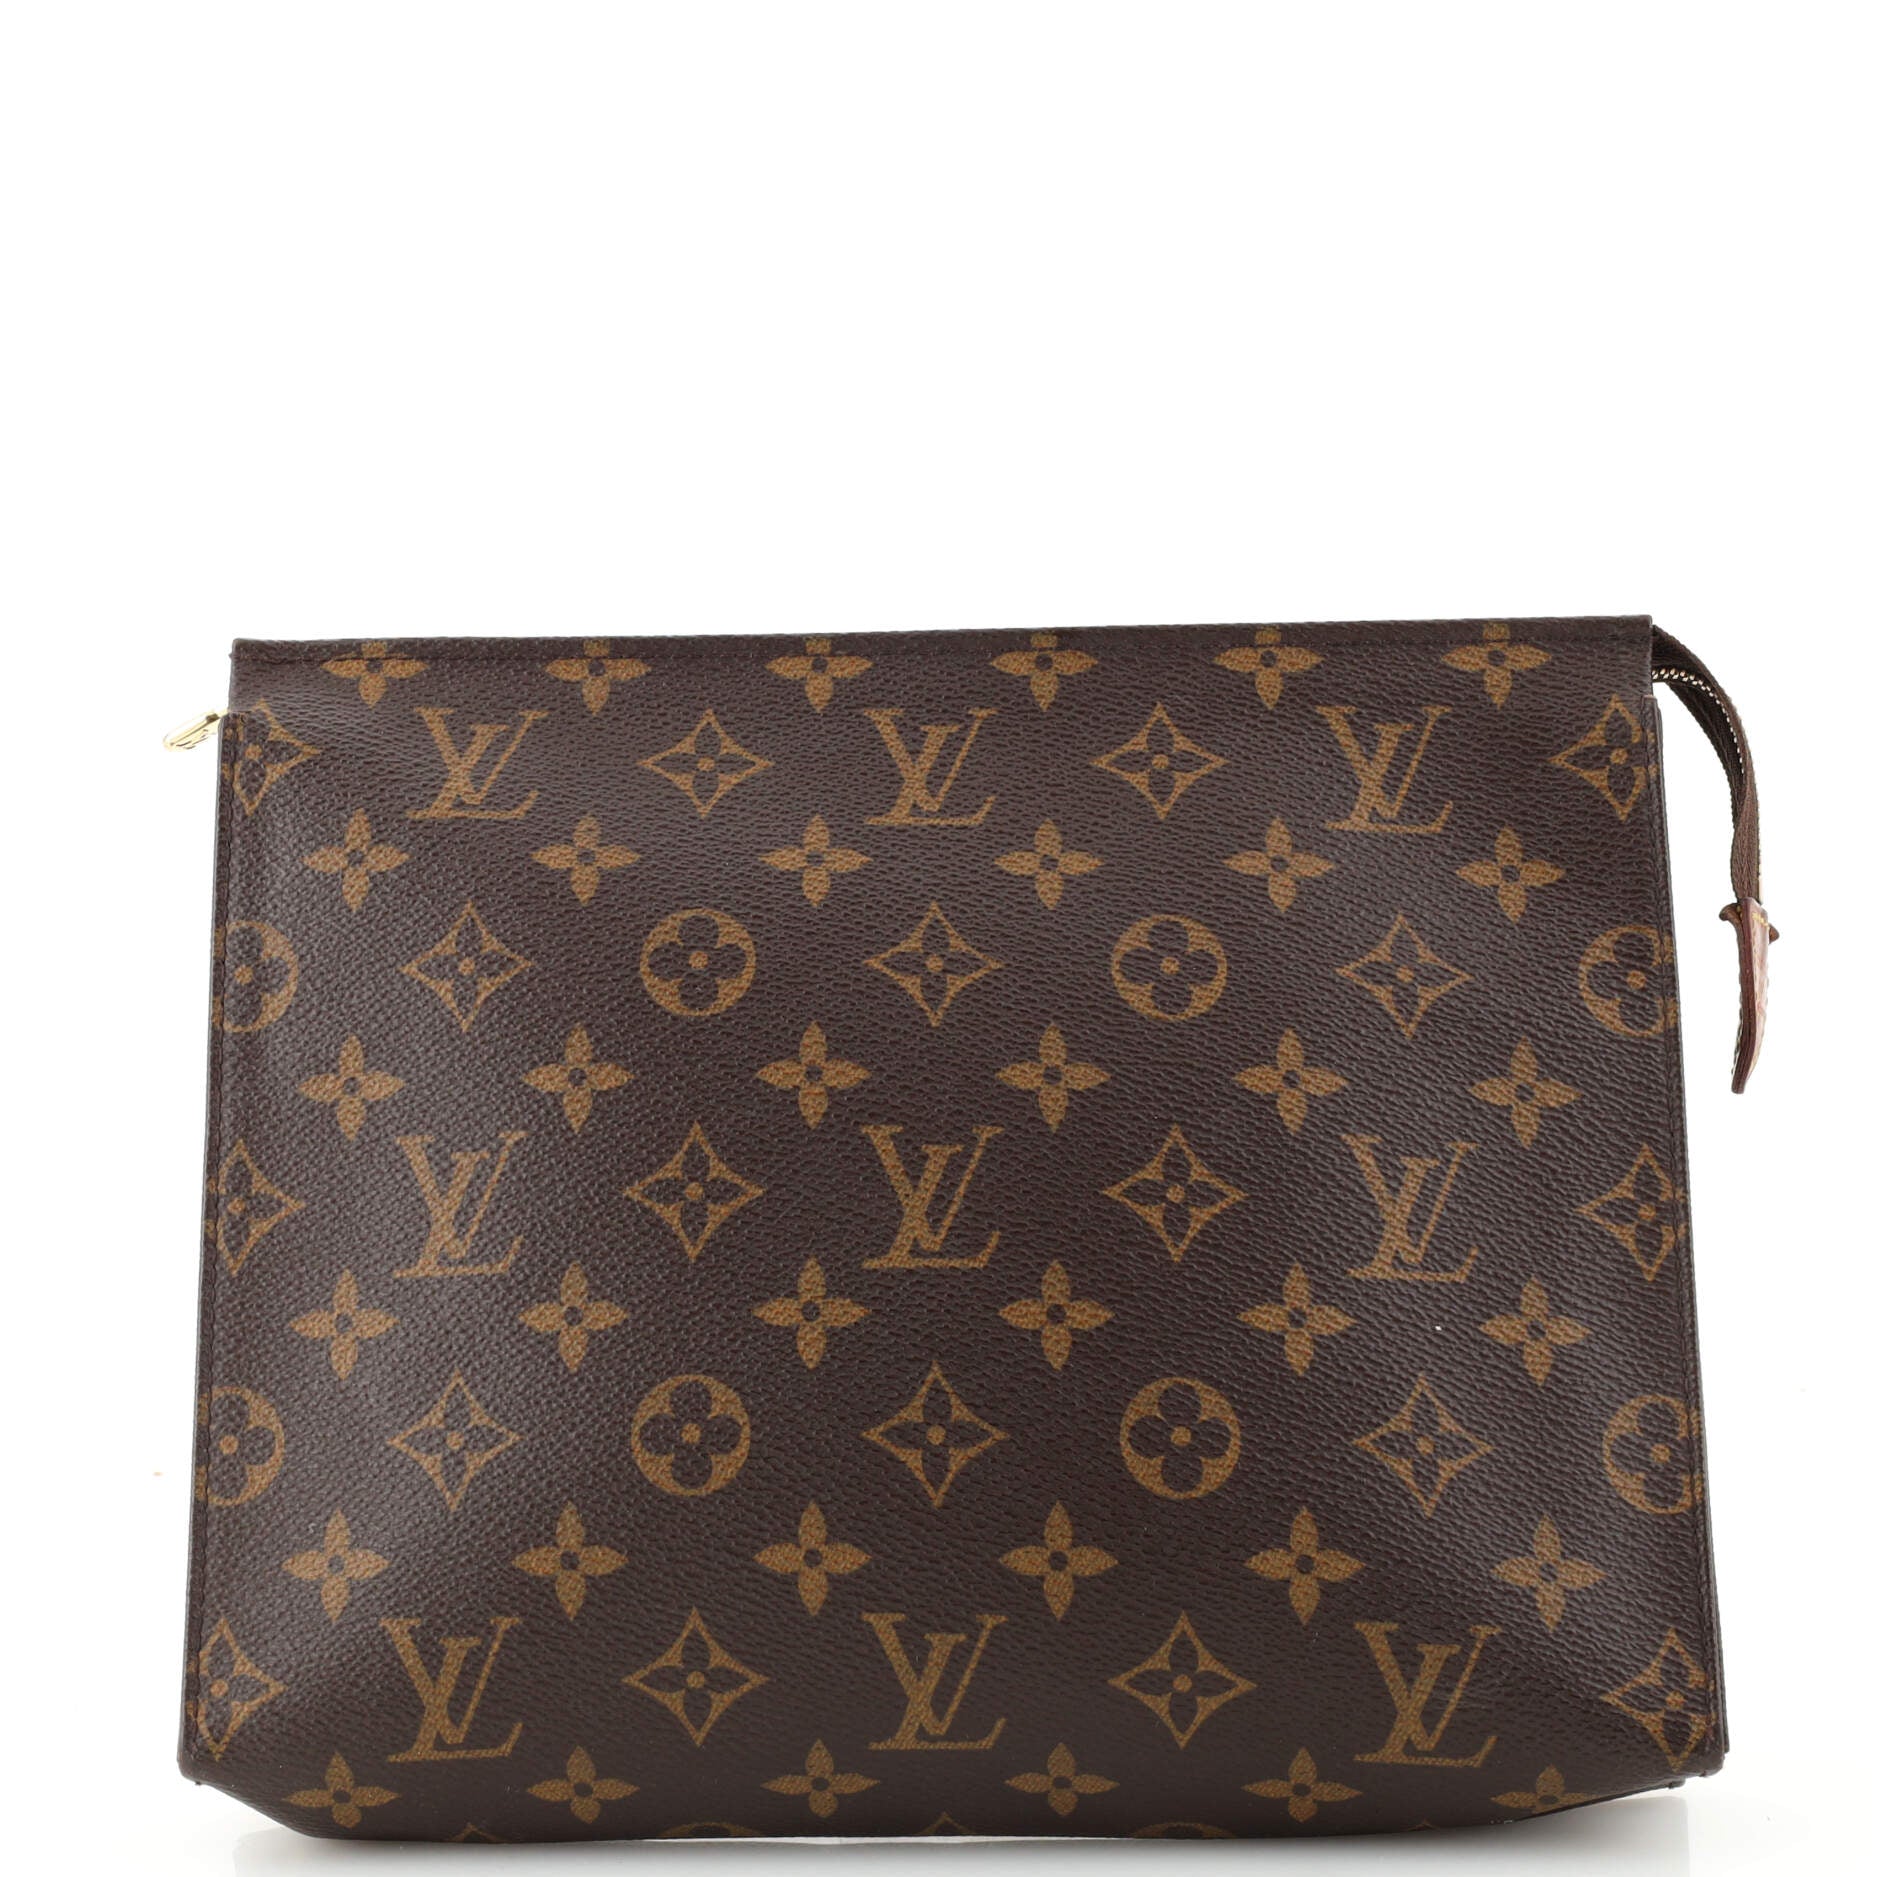 Louis Vuitton, Bags, Louis Vuitton Louis Vuitton Utility Supple Clutch Bag  Second Damier Graphite